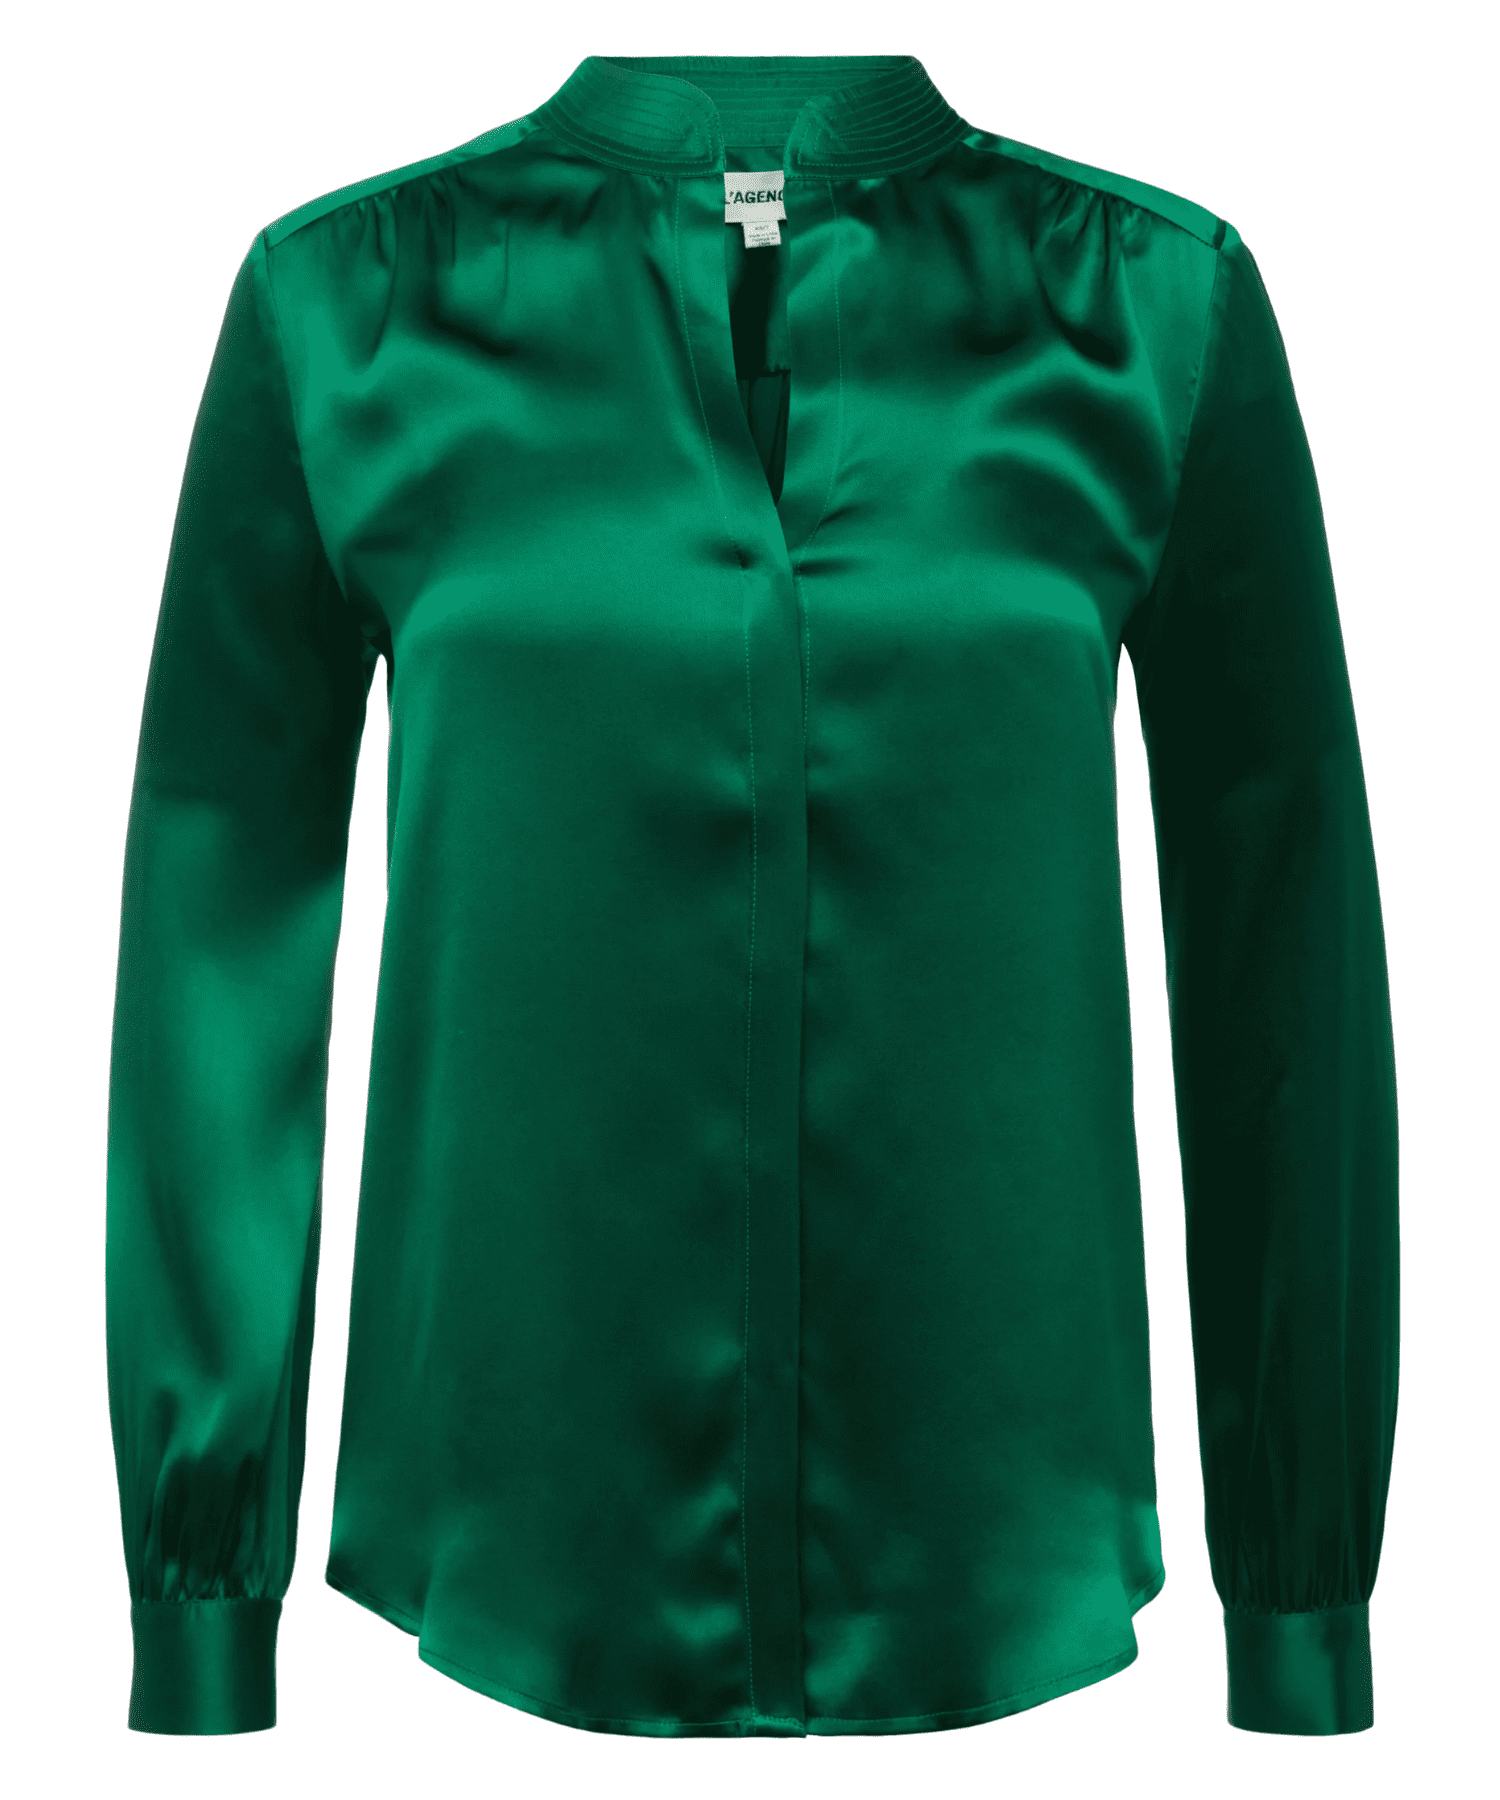 https://hartlyfashions.com/wp-content/uploads/2022/08/bianca-blouse-clover-green-lagence.png